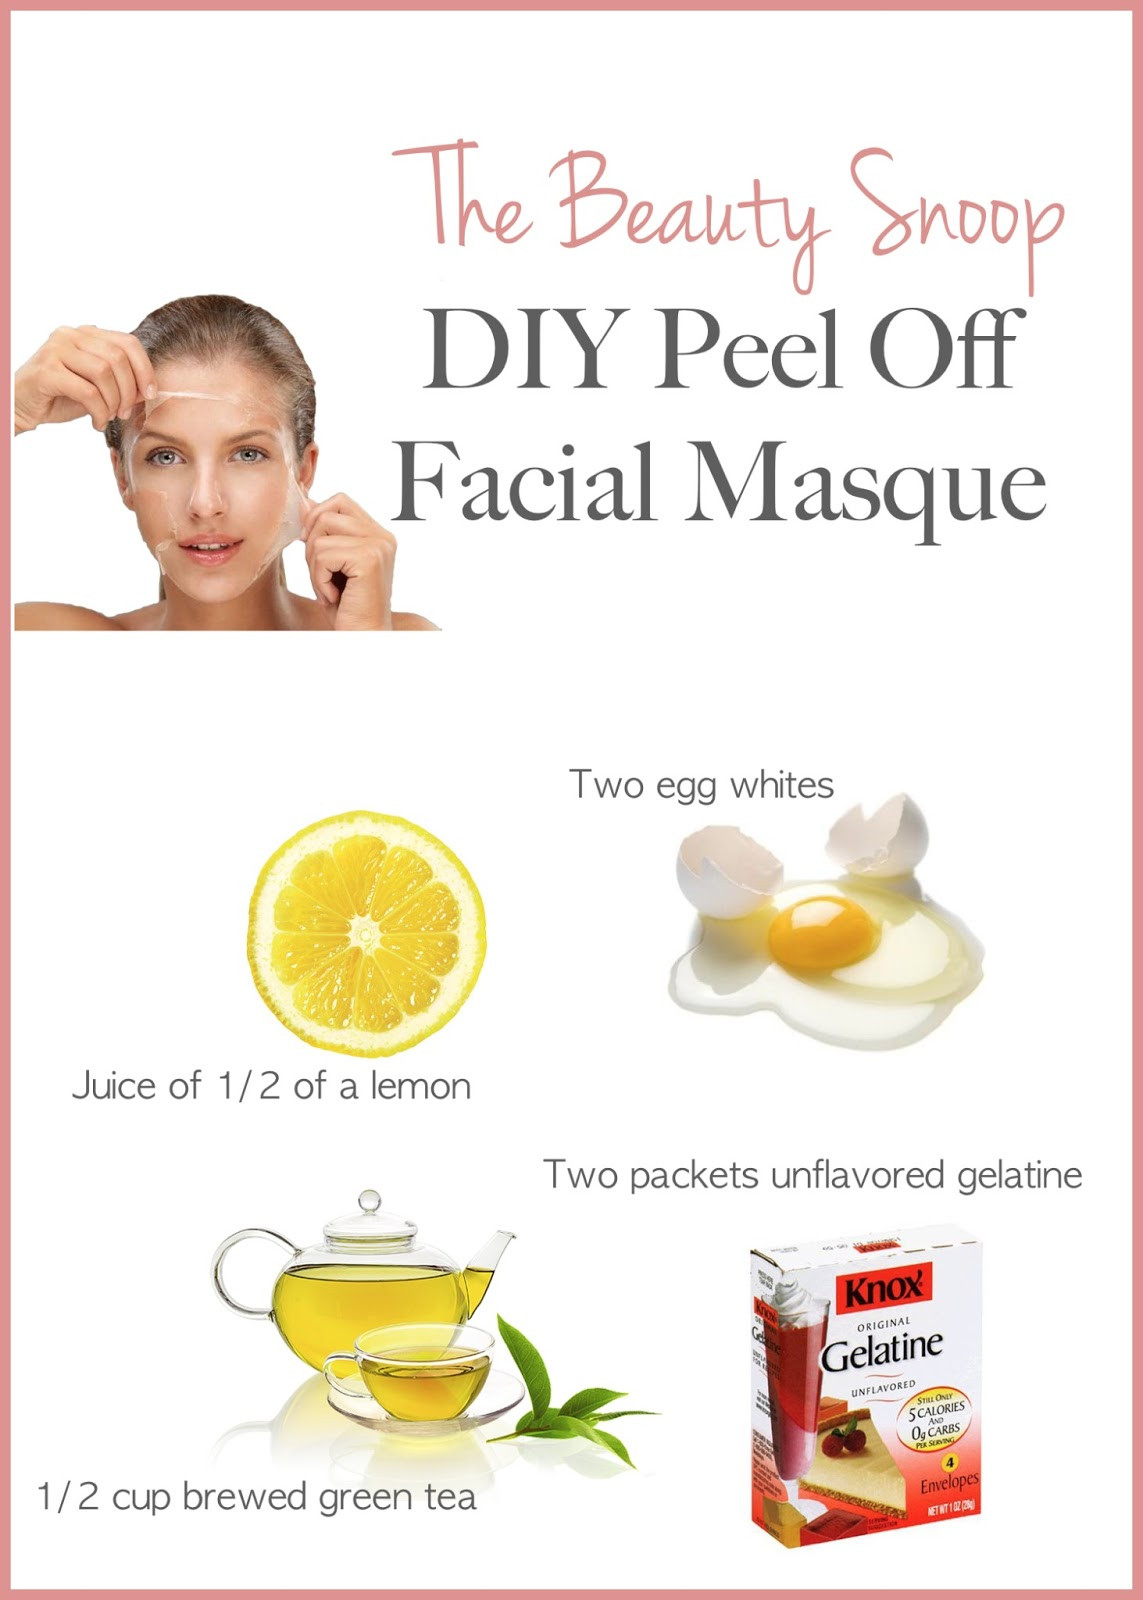 DIY Peel Off Face Mask With Egg
 THE BEAUTY SNOOP DIY PEEL OFF DETOX FACIAL MASQUE